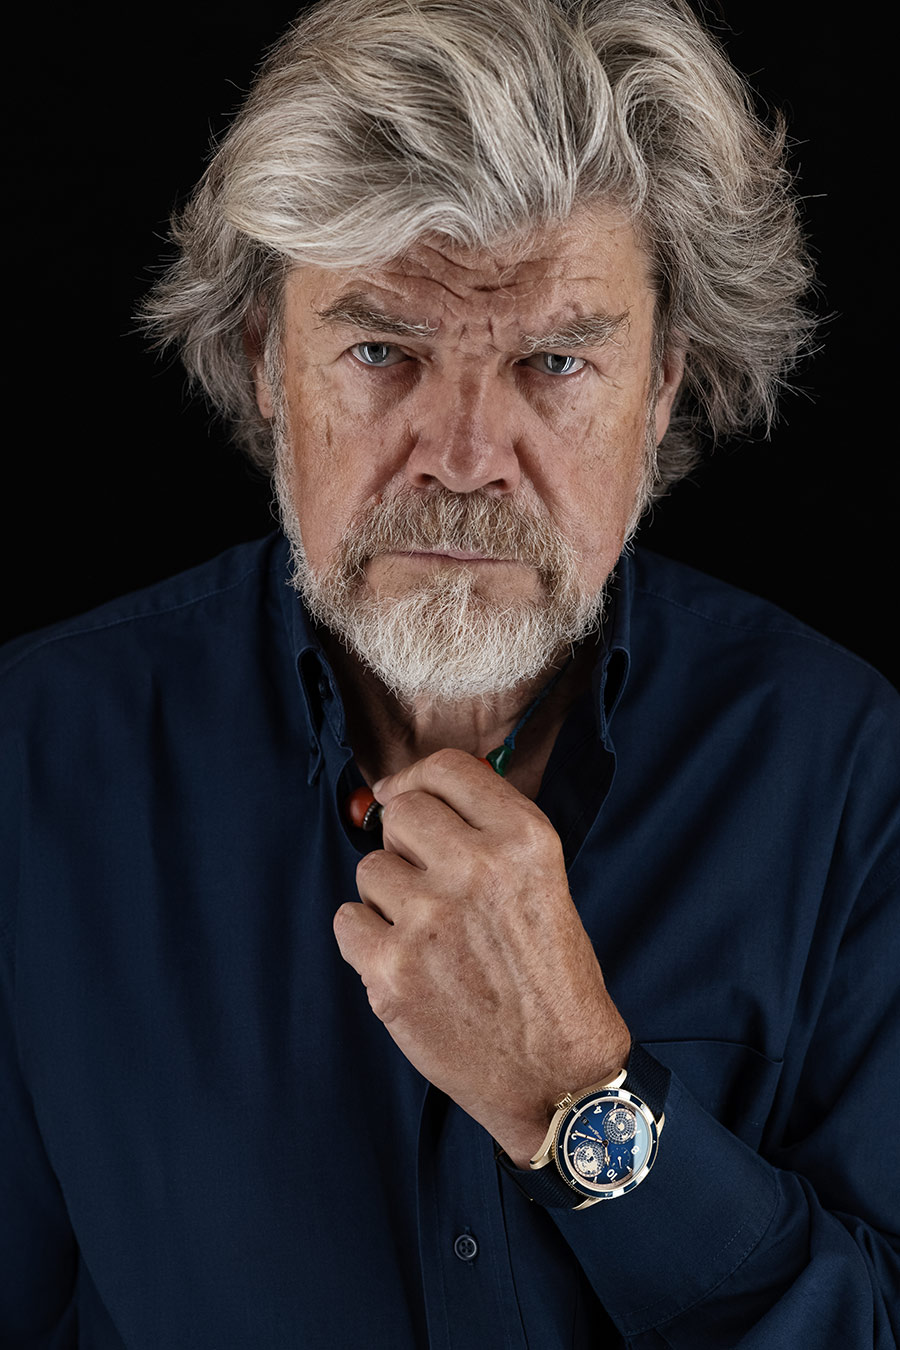 Montblanc 1858 Geosphere LE Reinhold Messner